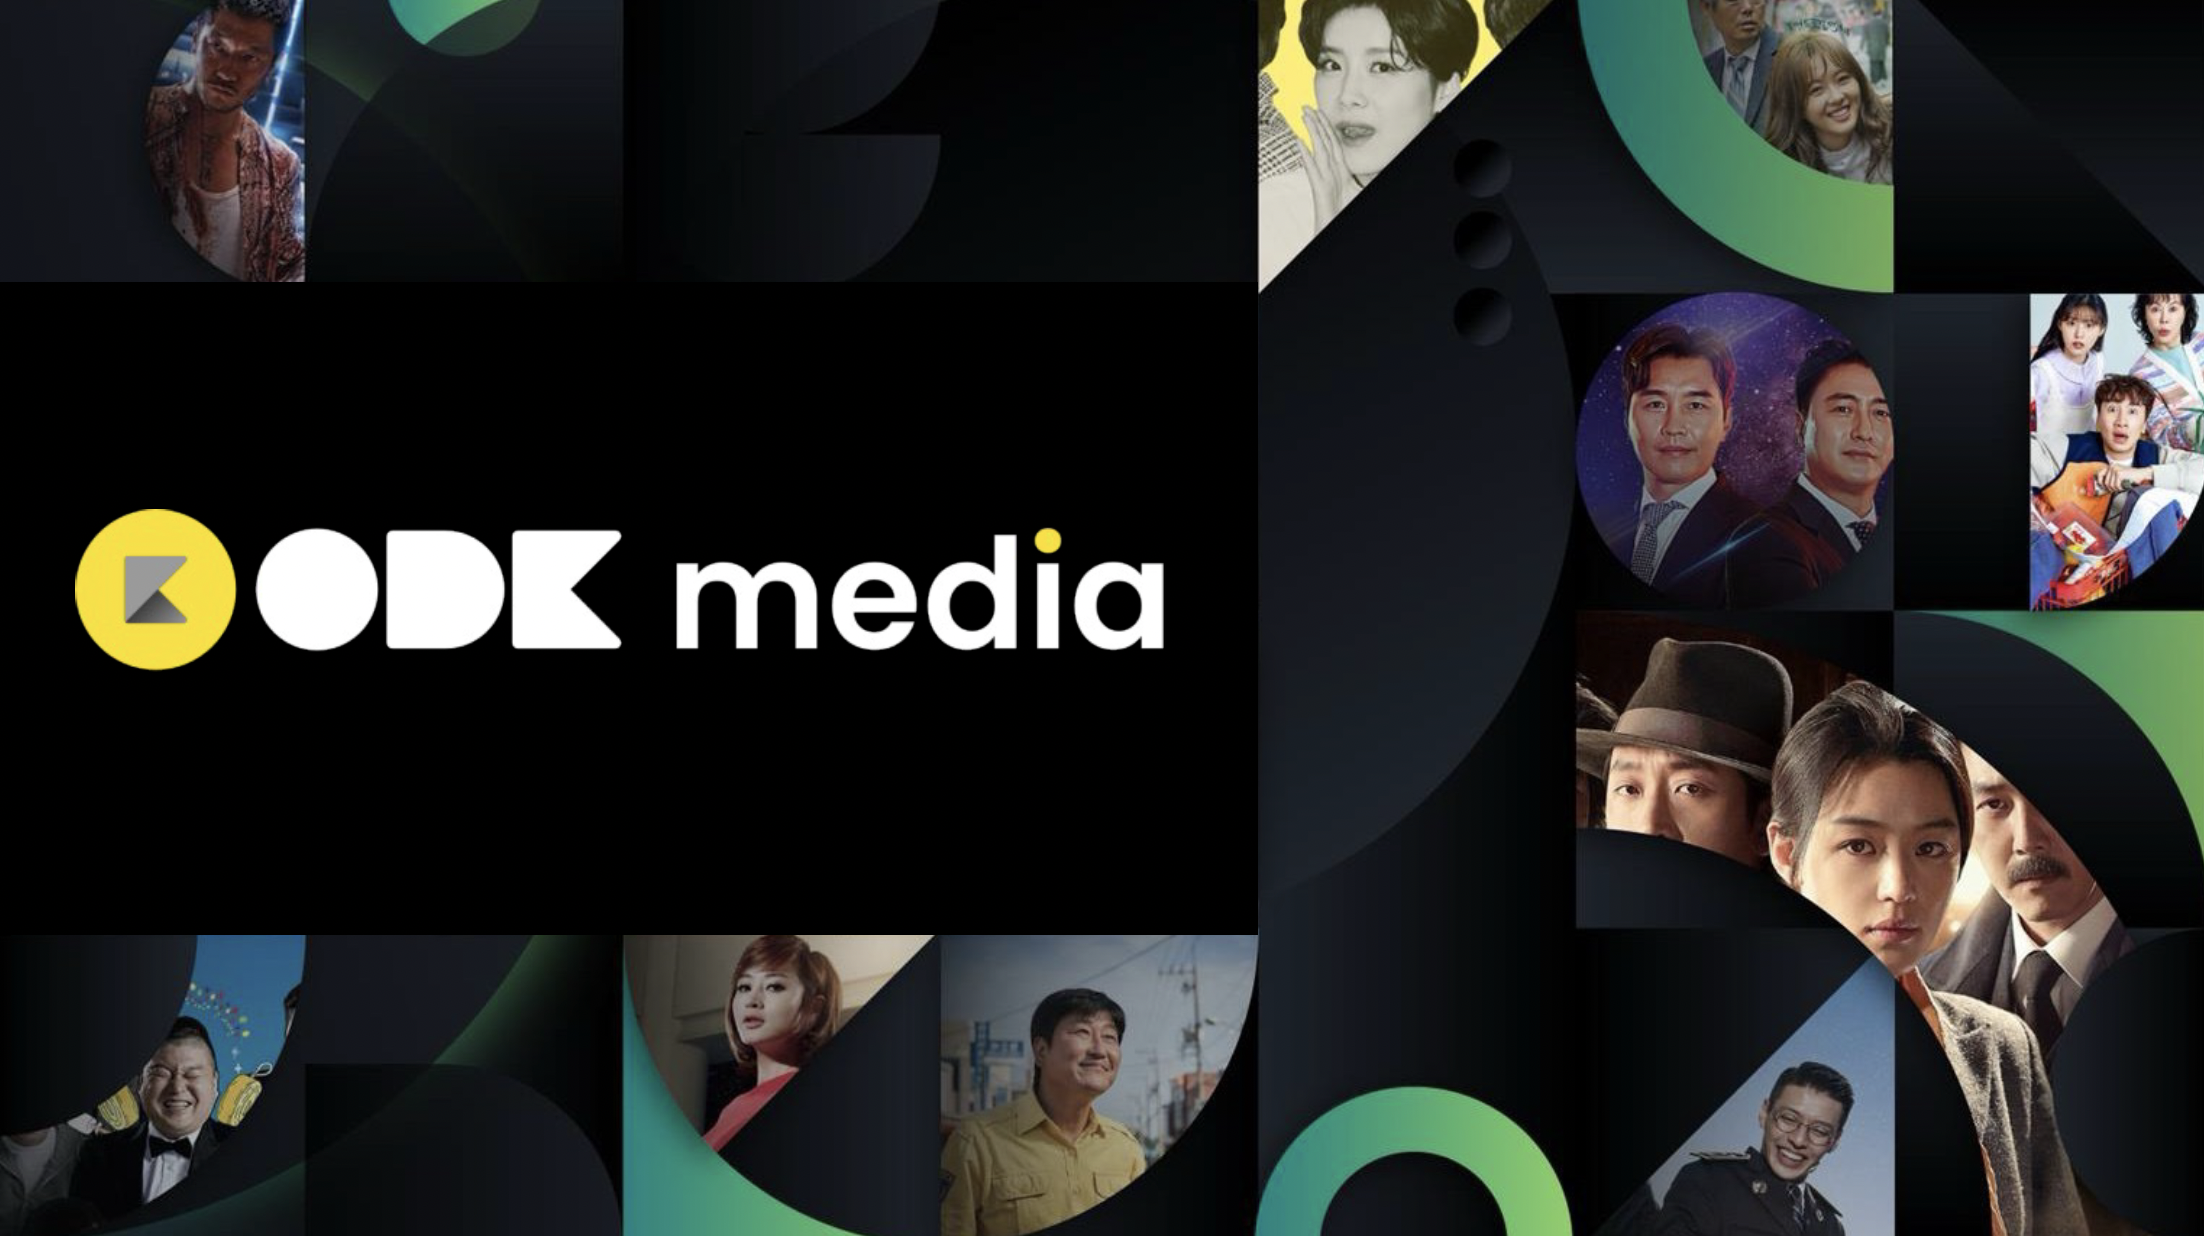 ODK 미디어, K콘텐츠의 세계화 과정에 ‘아시아계 커뮤니티의 중요성’ 강조 (ODK Media, The “Importance of the Asian Community” in Globalizing K-Content)